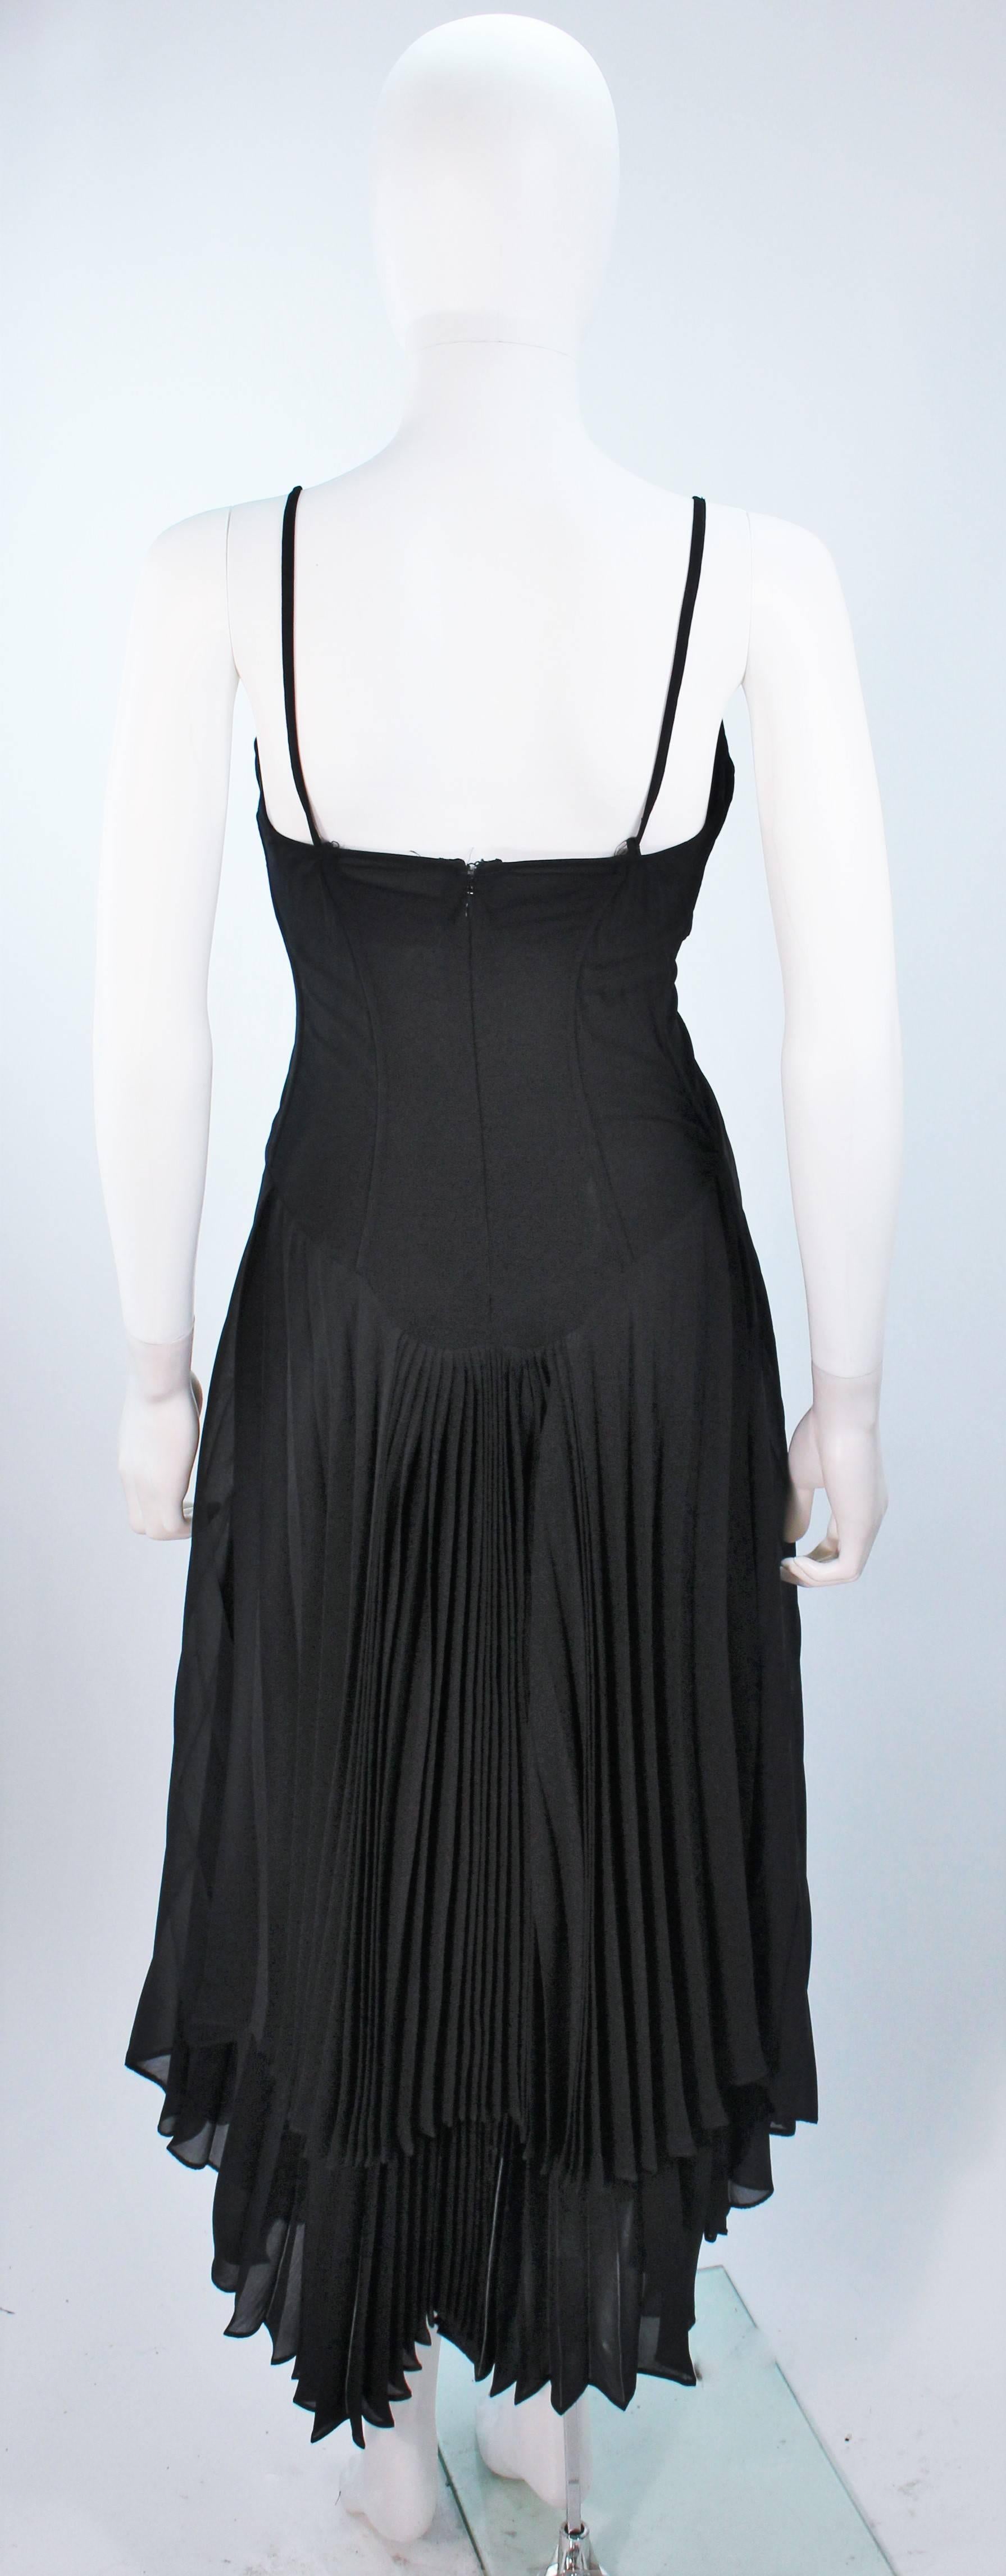 PACO RABANNE Black Silk Jerset Dress with Rhinestone Detail Size 42 For Sale 1